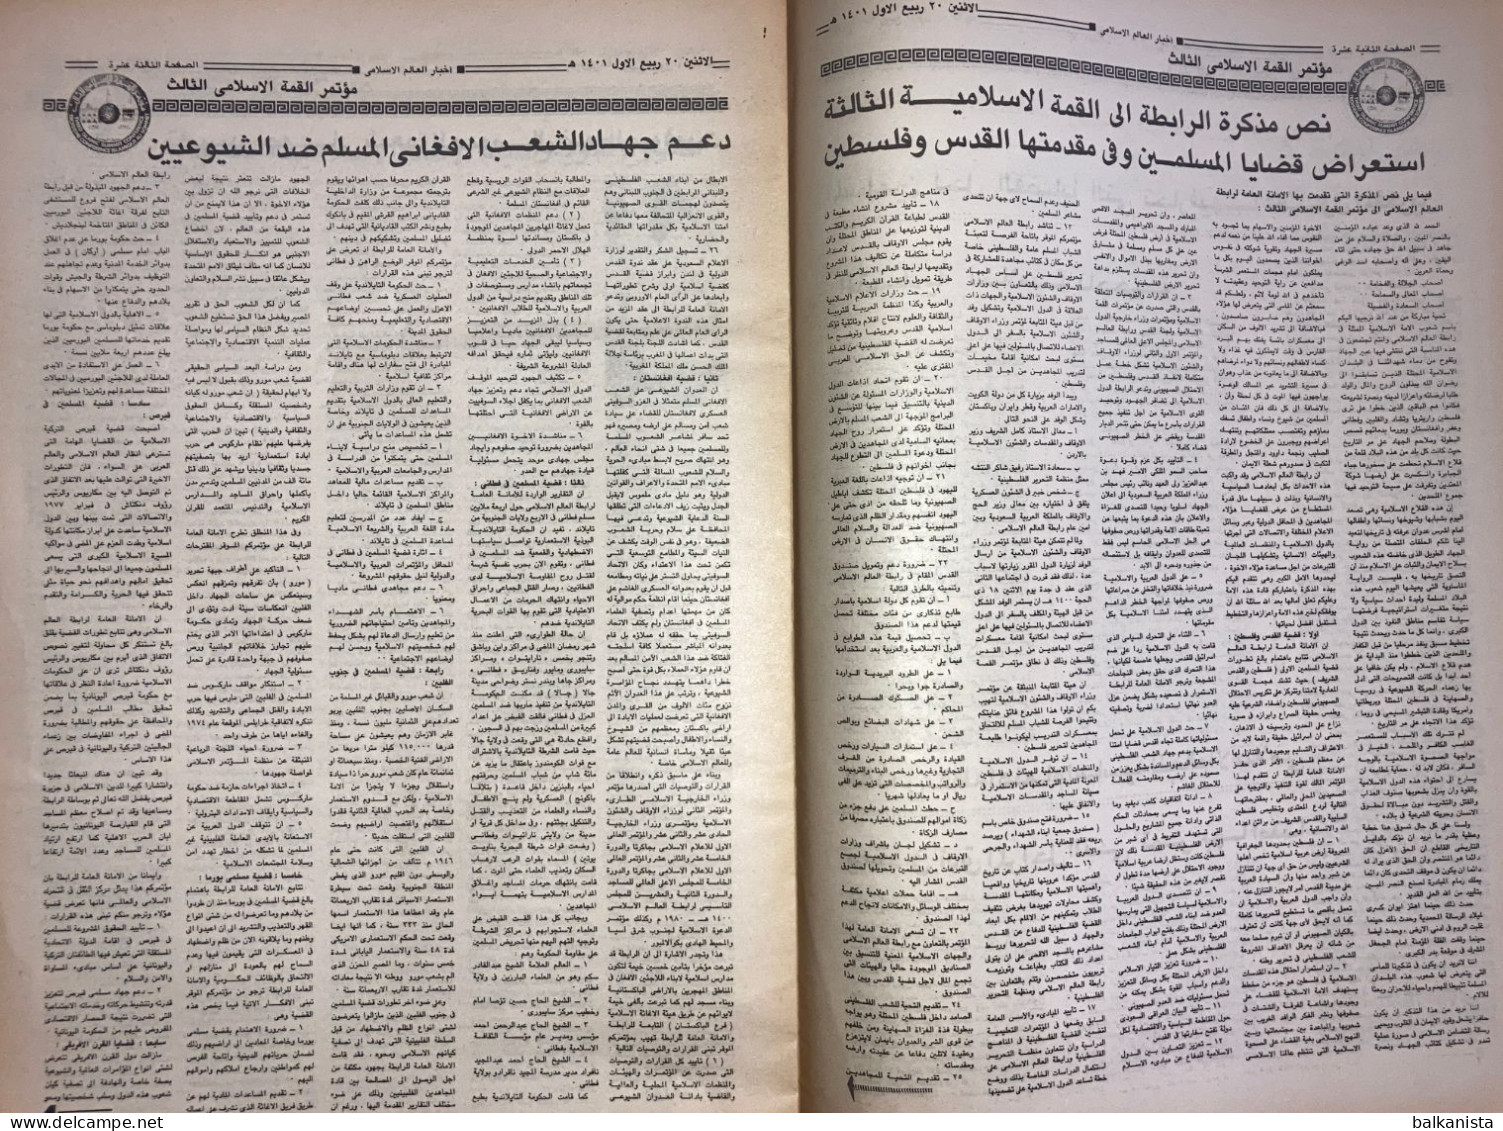 Saudi Arabia  Akhbar al-Alam al-Islami Newspaper  26 January 1981